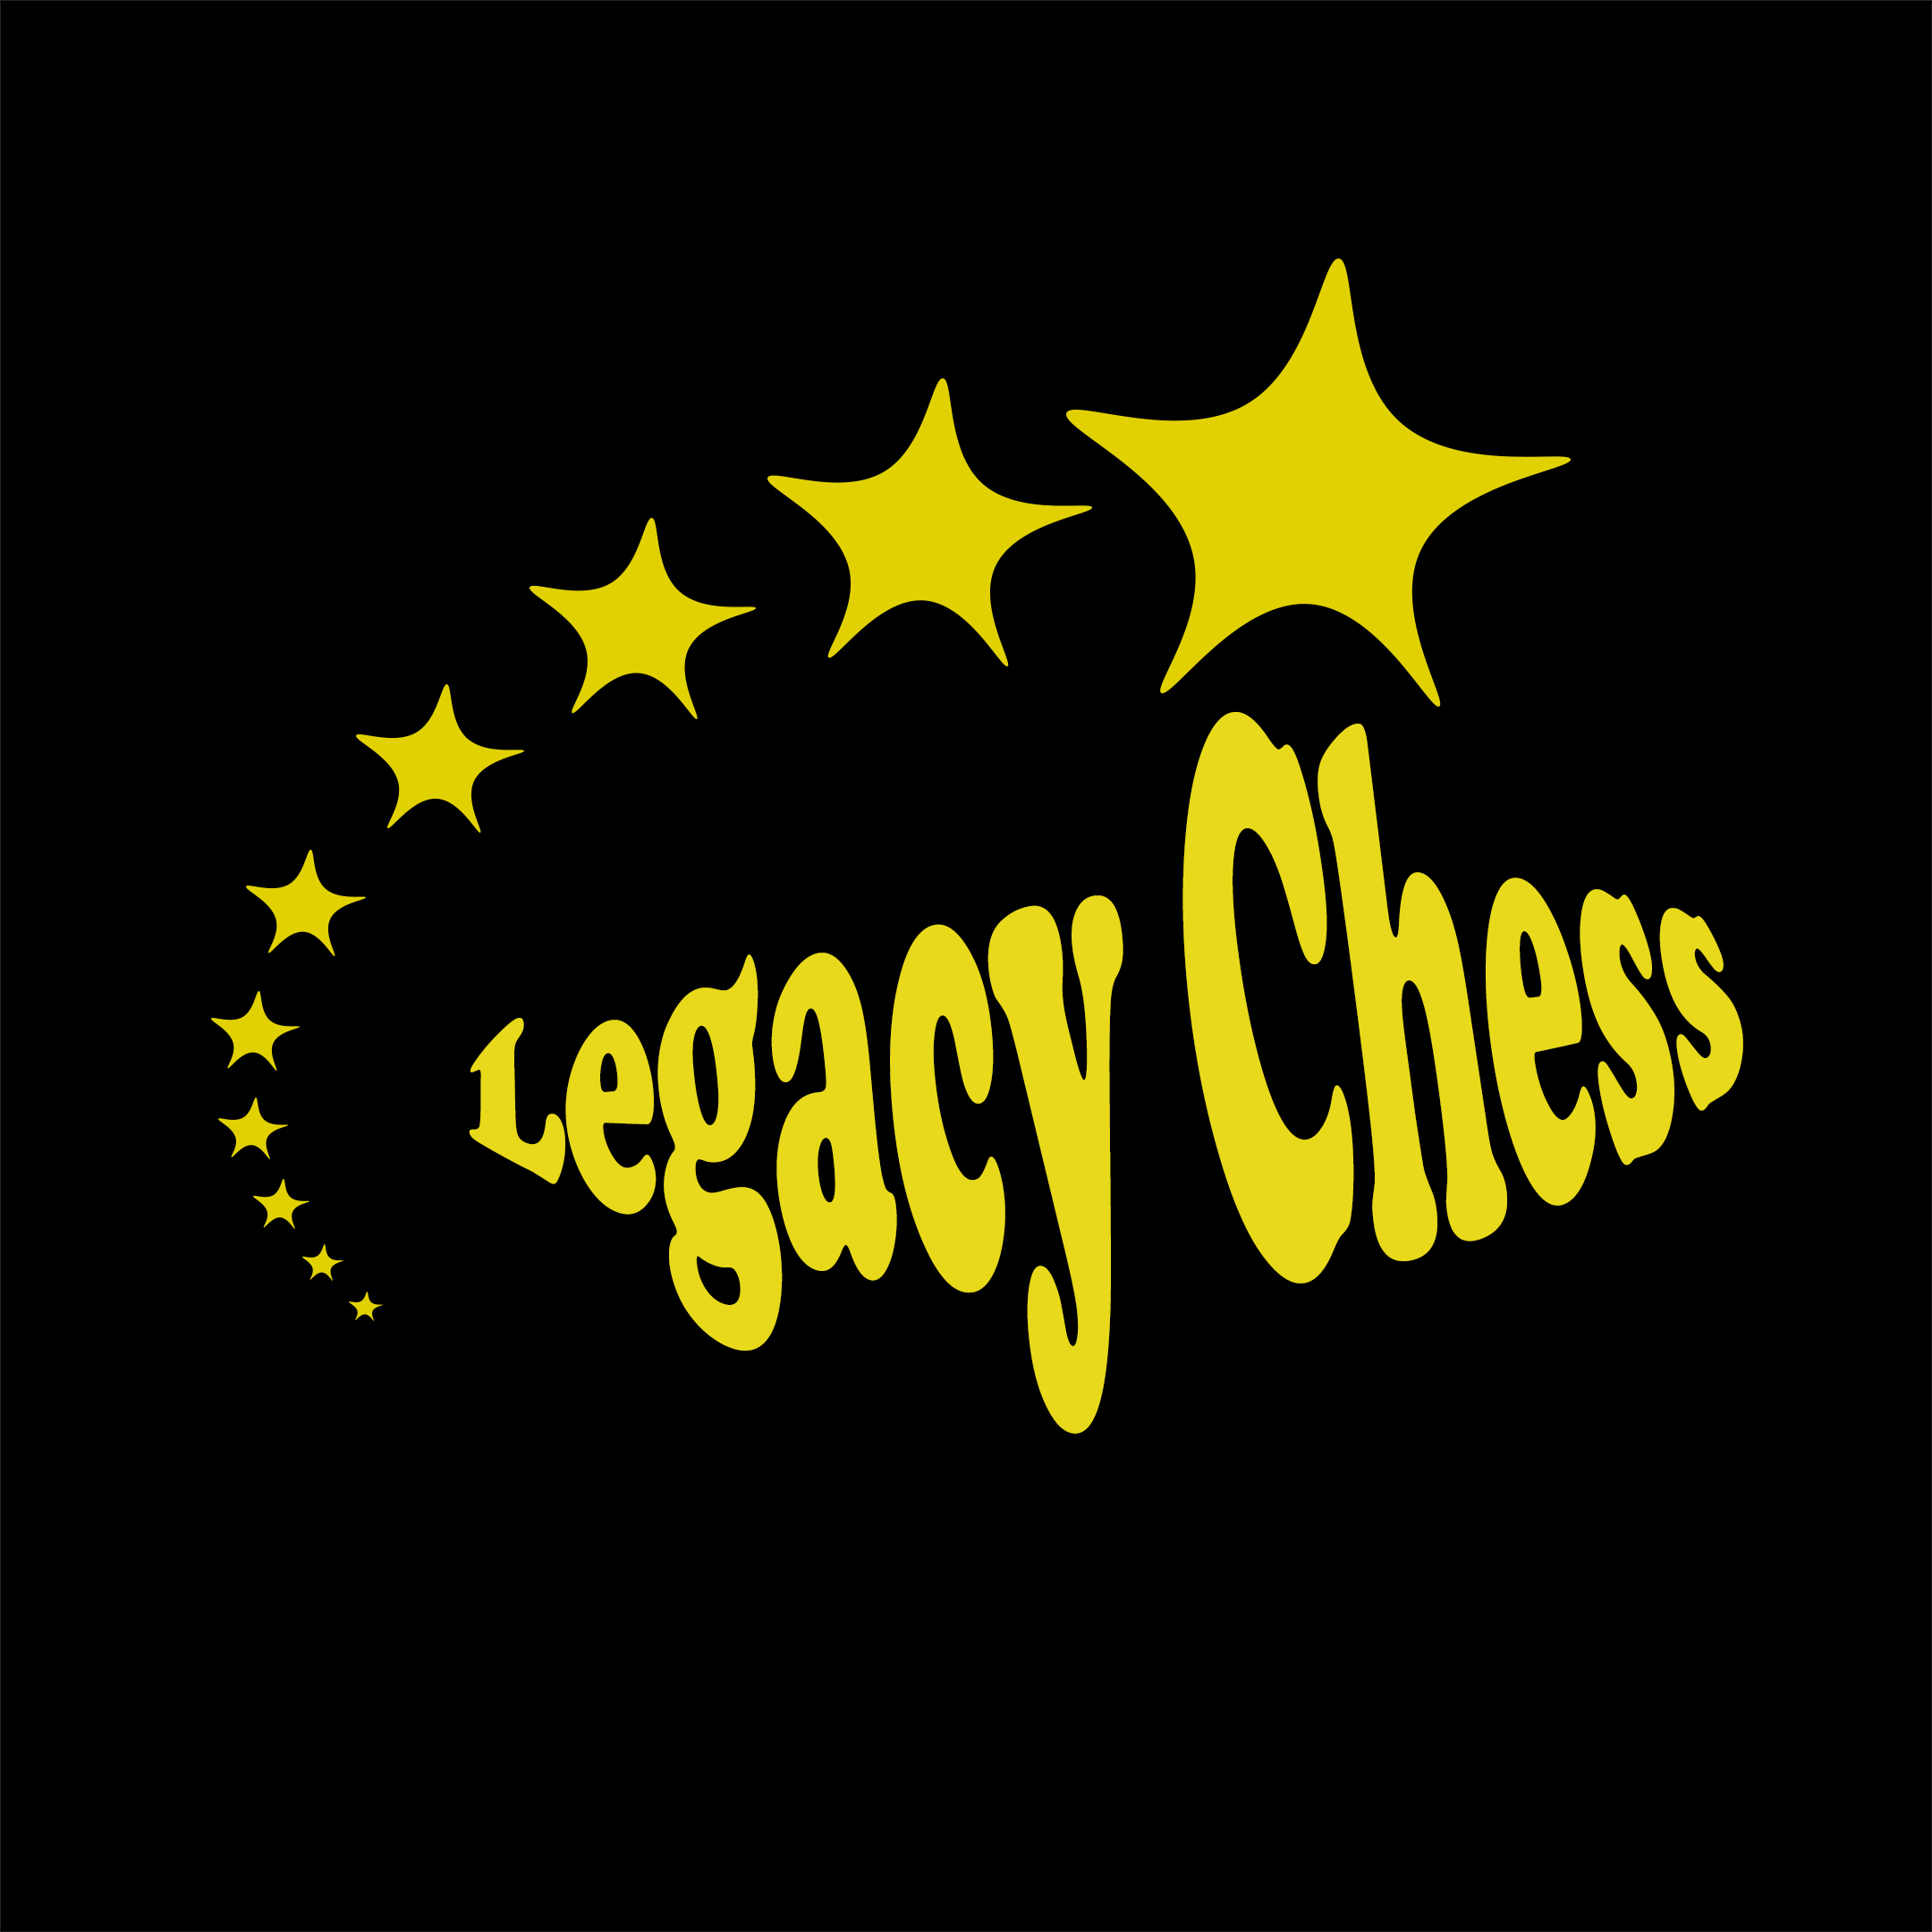 Legacy Chess